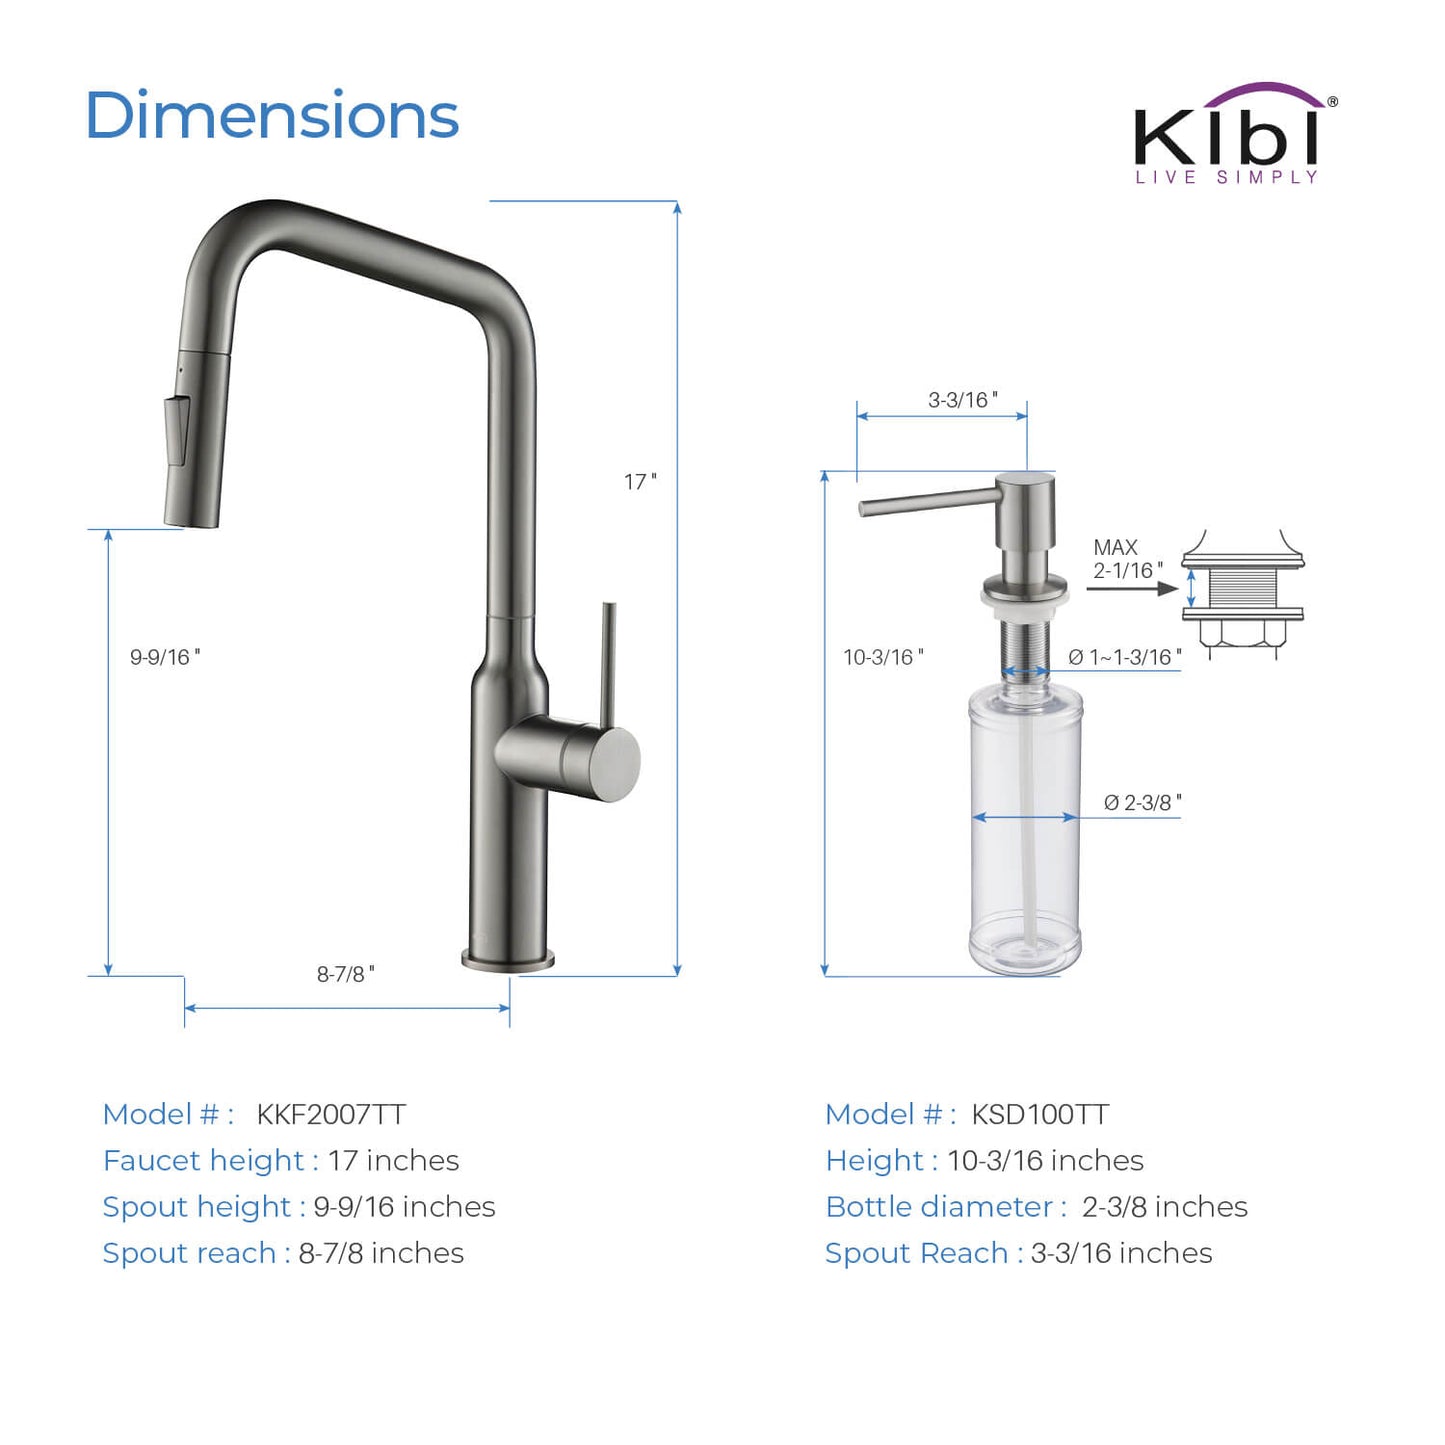 Kibi Macon Single Handle High Arc Pull Down Kitchen Faucet With Soap Dispenser in Titanium Finish